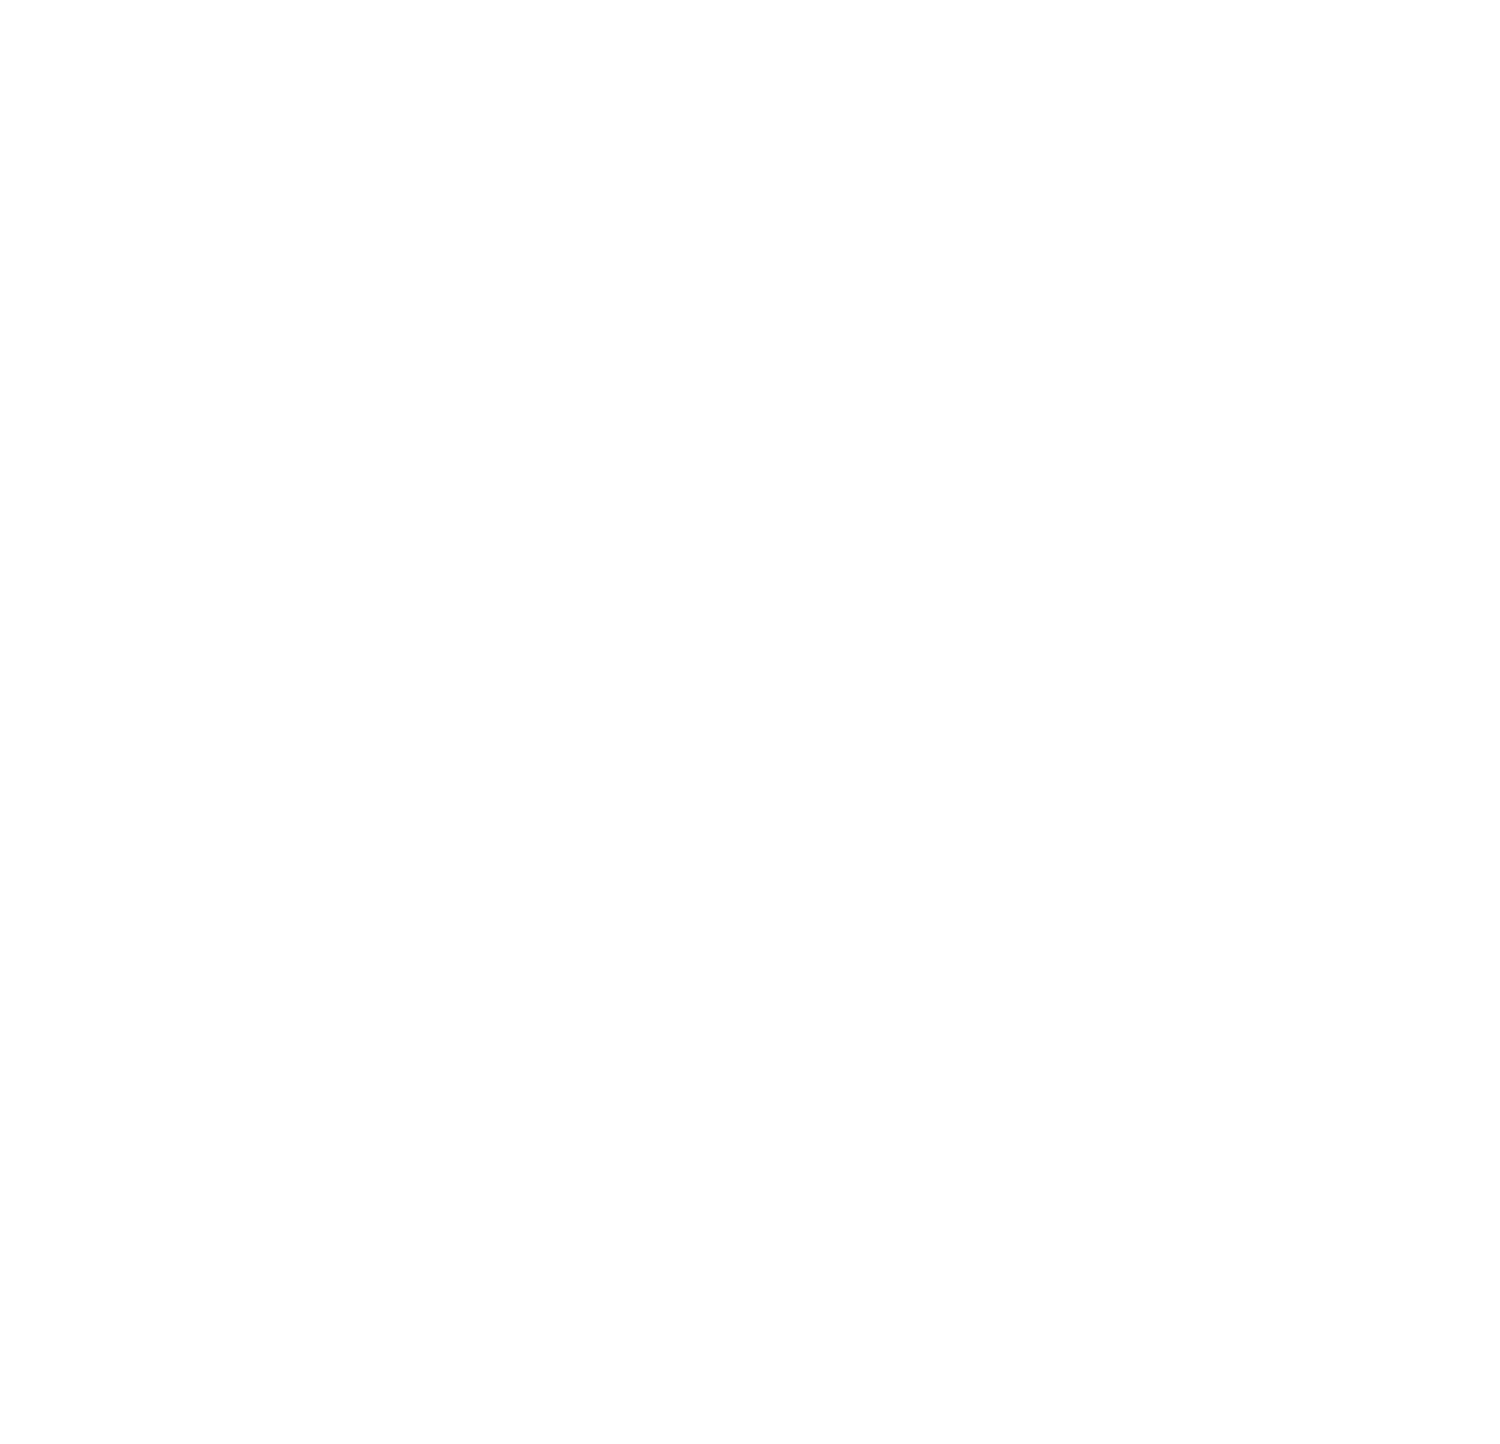 Salt Grain